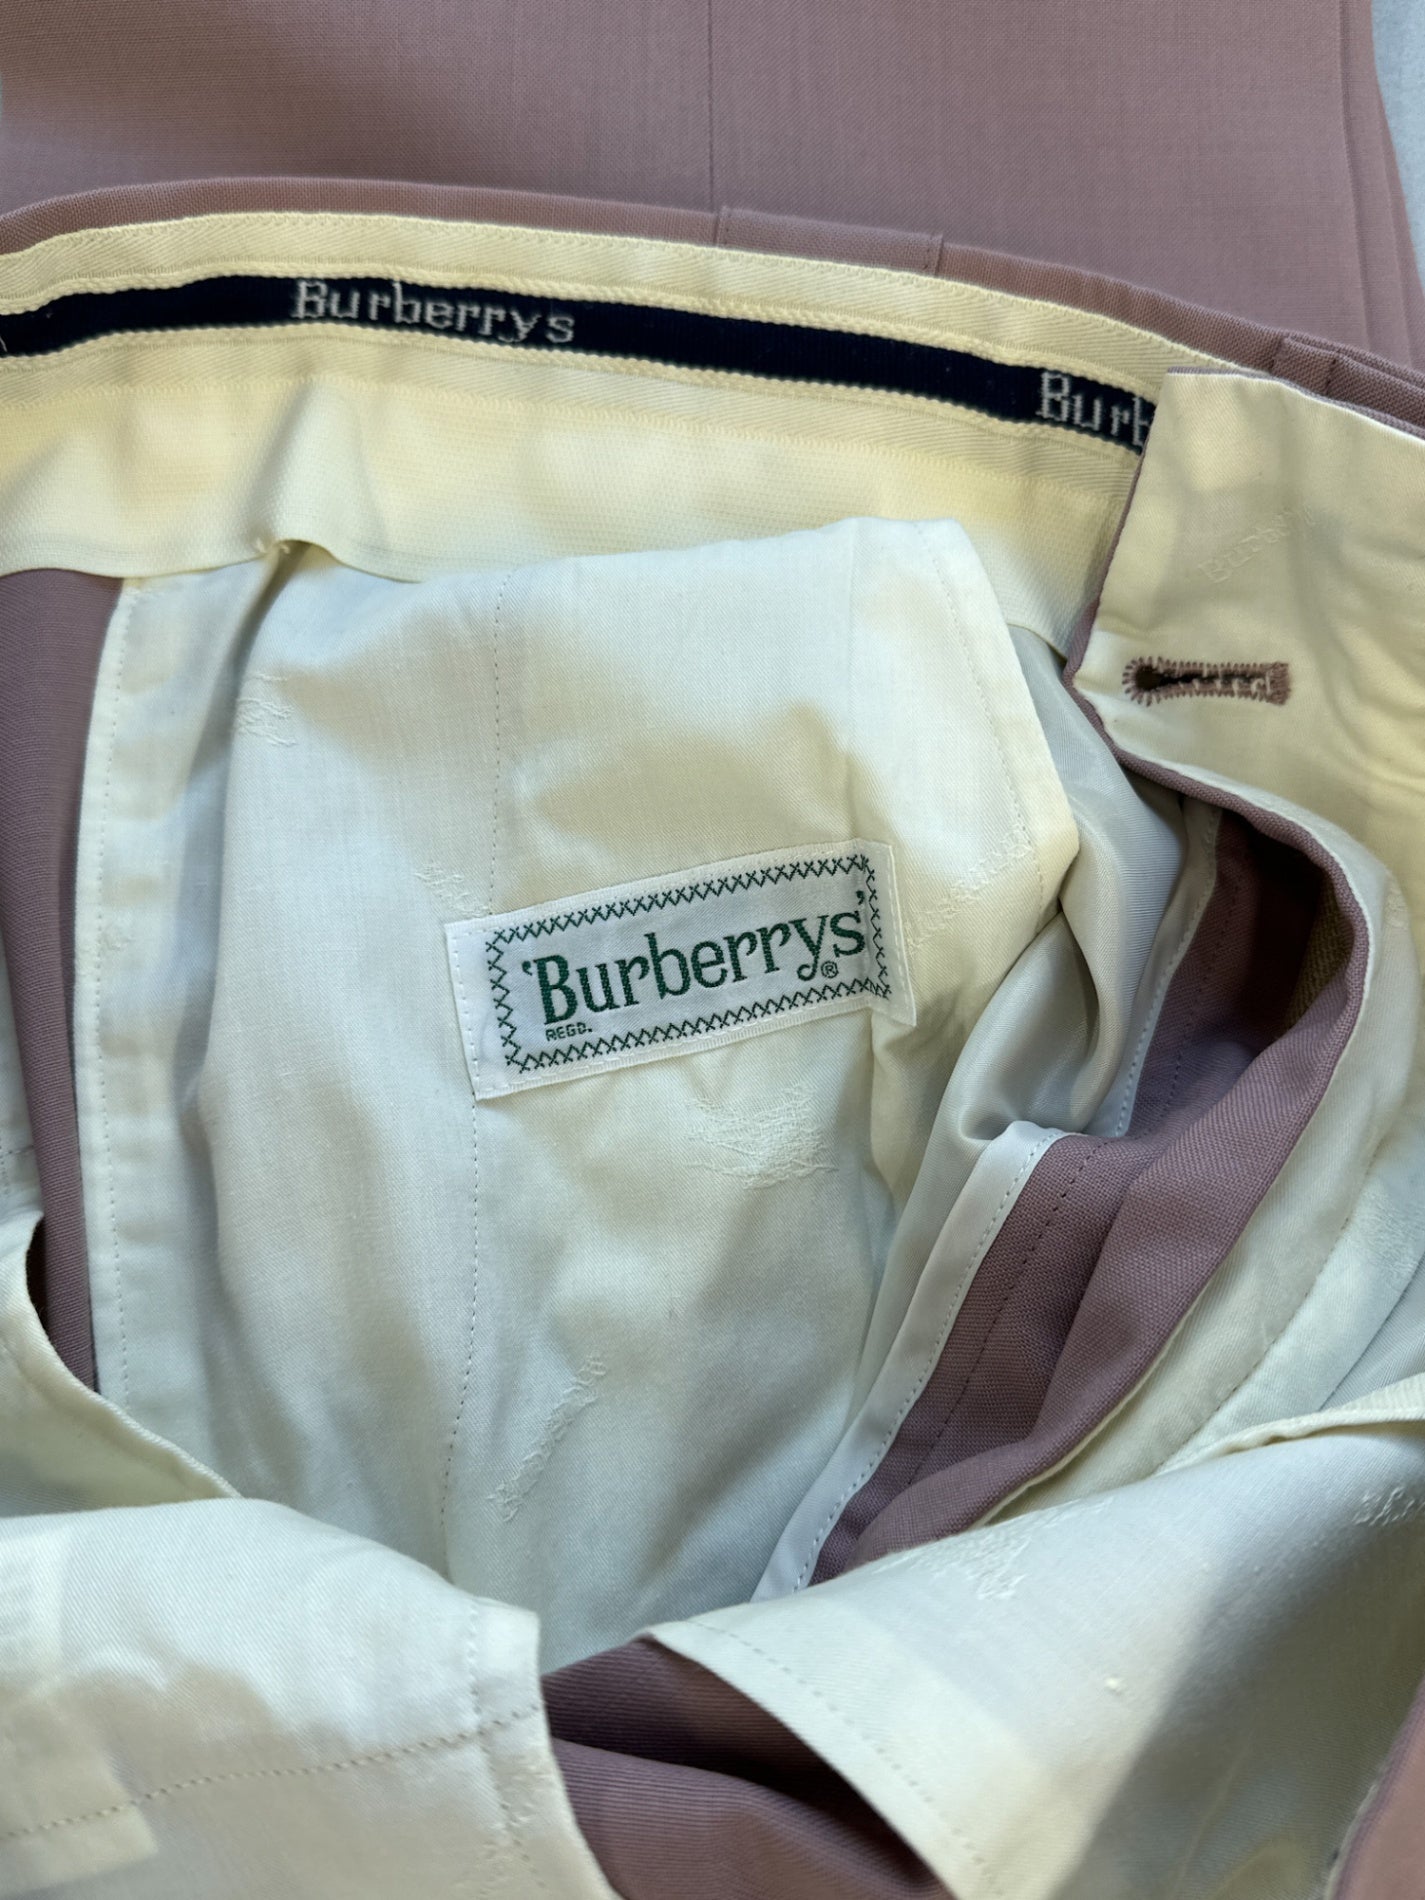 Burberry's tuck pants